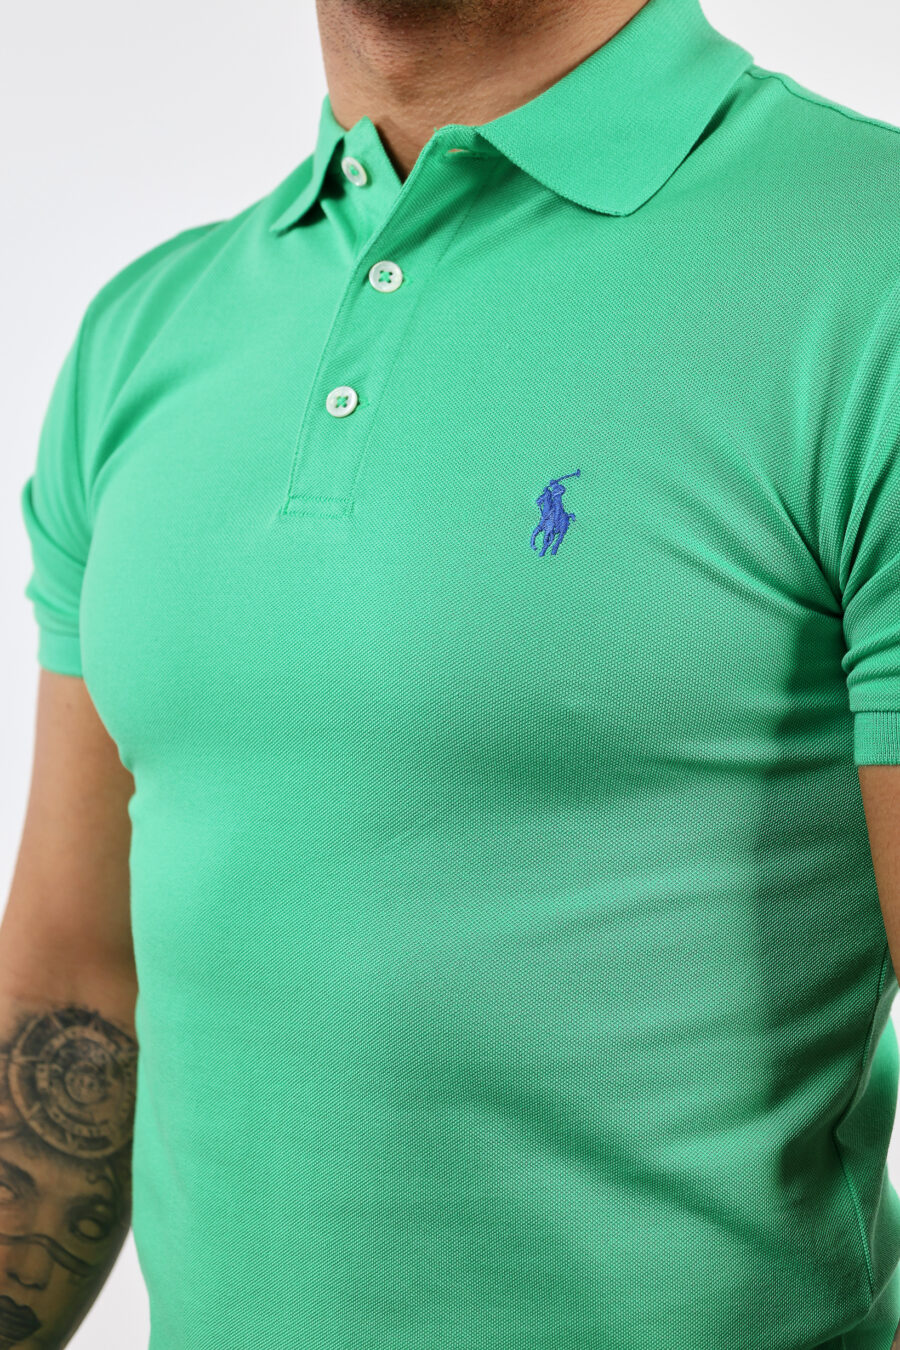 T-shirt verde e azul com mini-logotipo "polo" - BLS Fashion 174